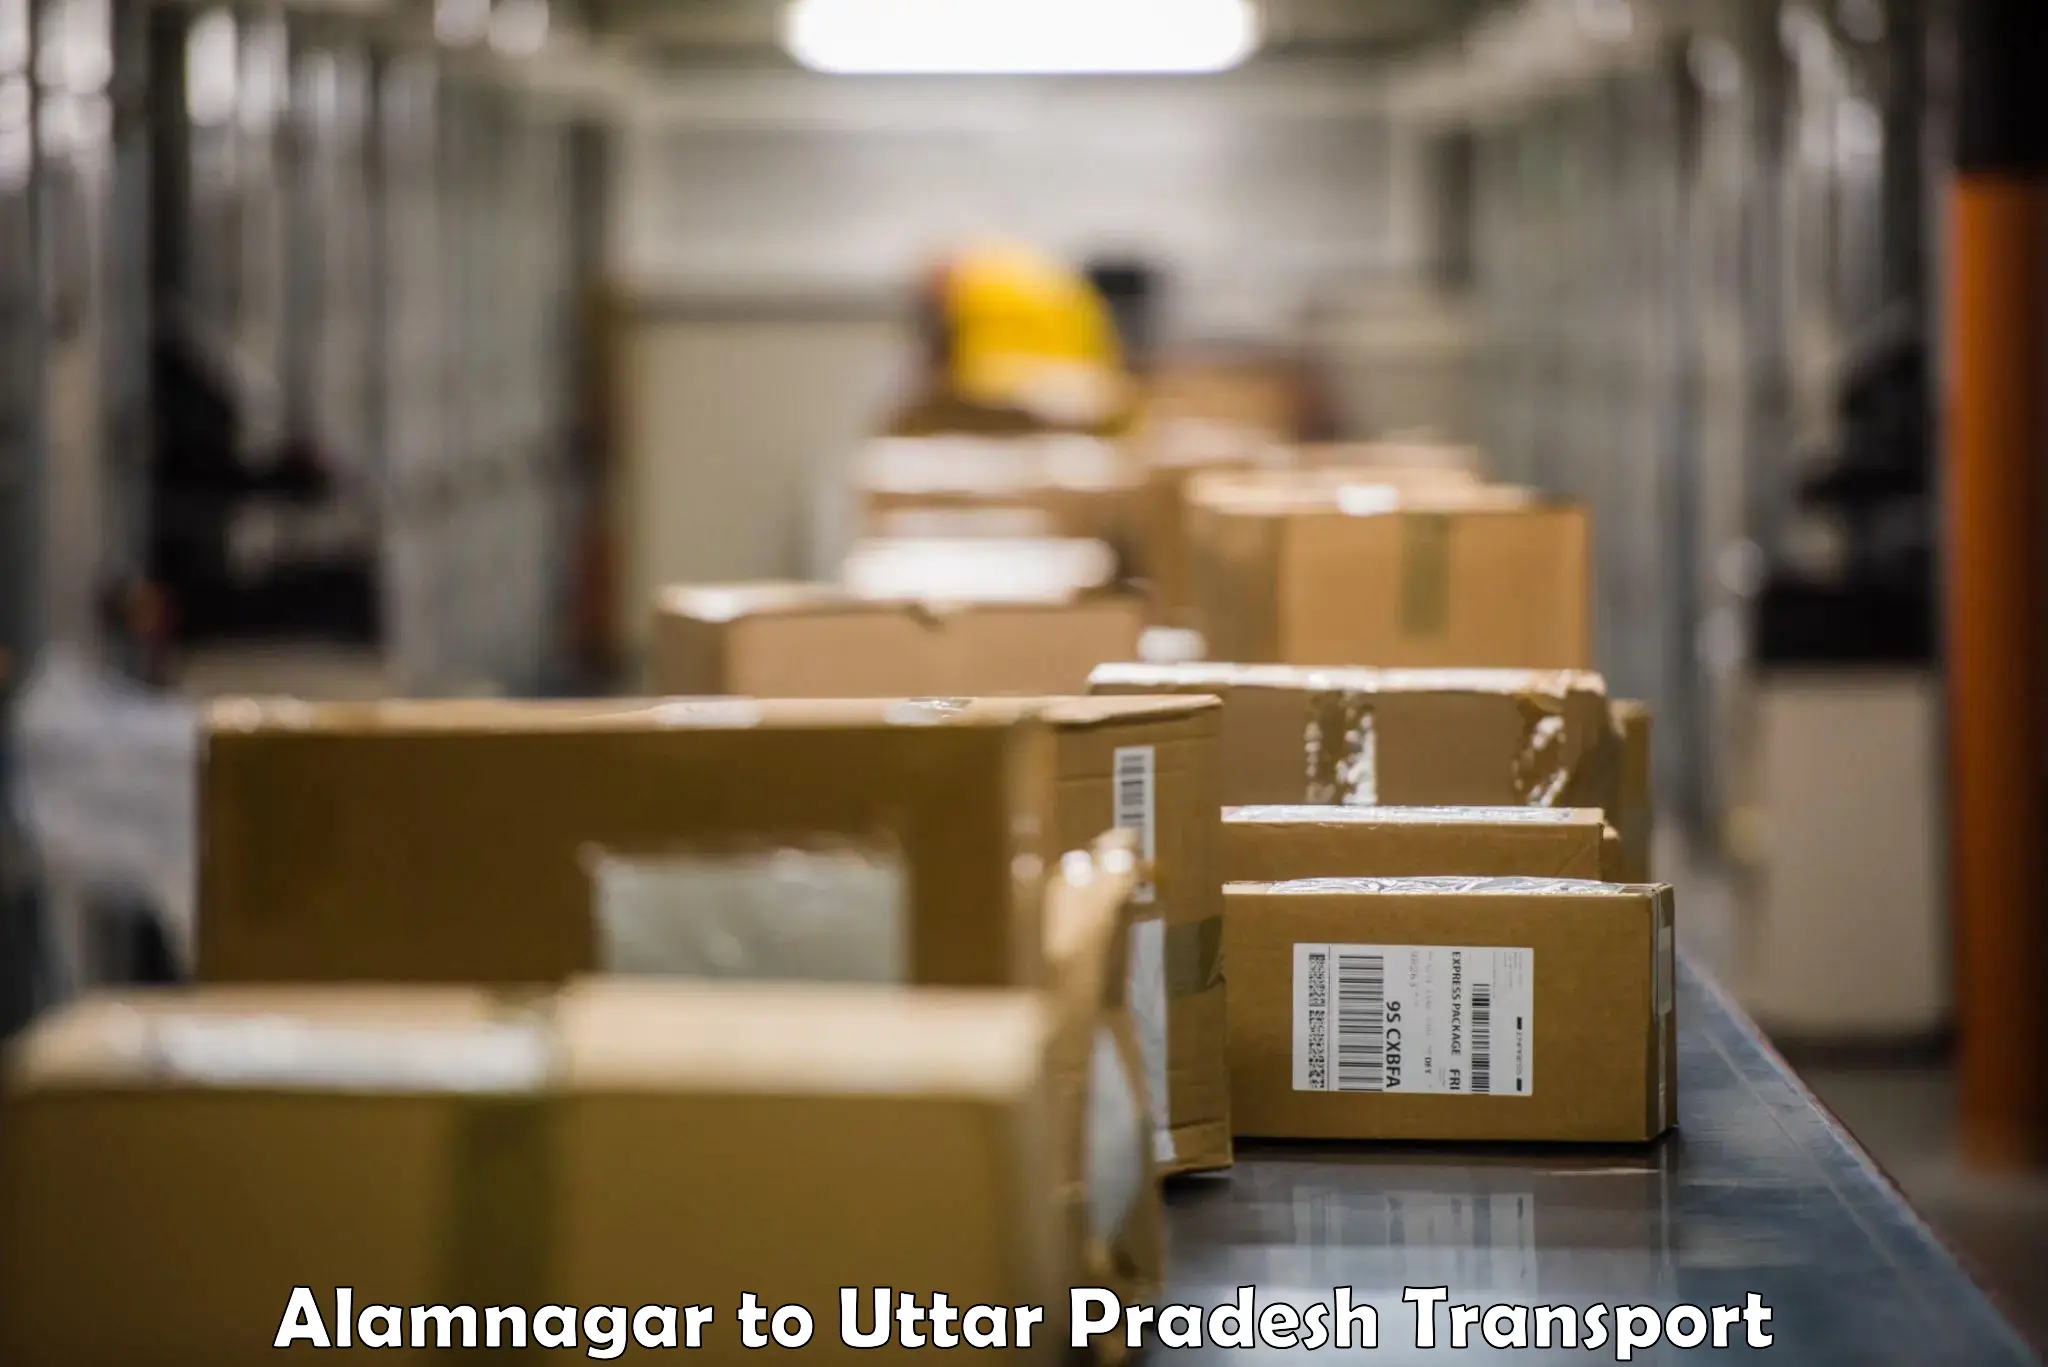 Truck transport companies in India Alamnagar to Rasulabad